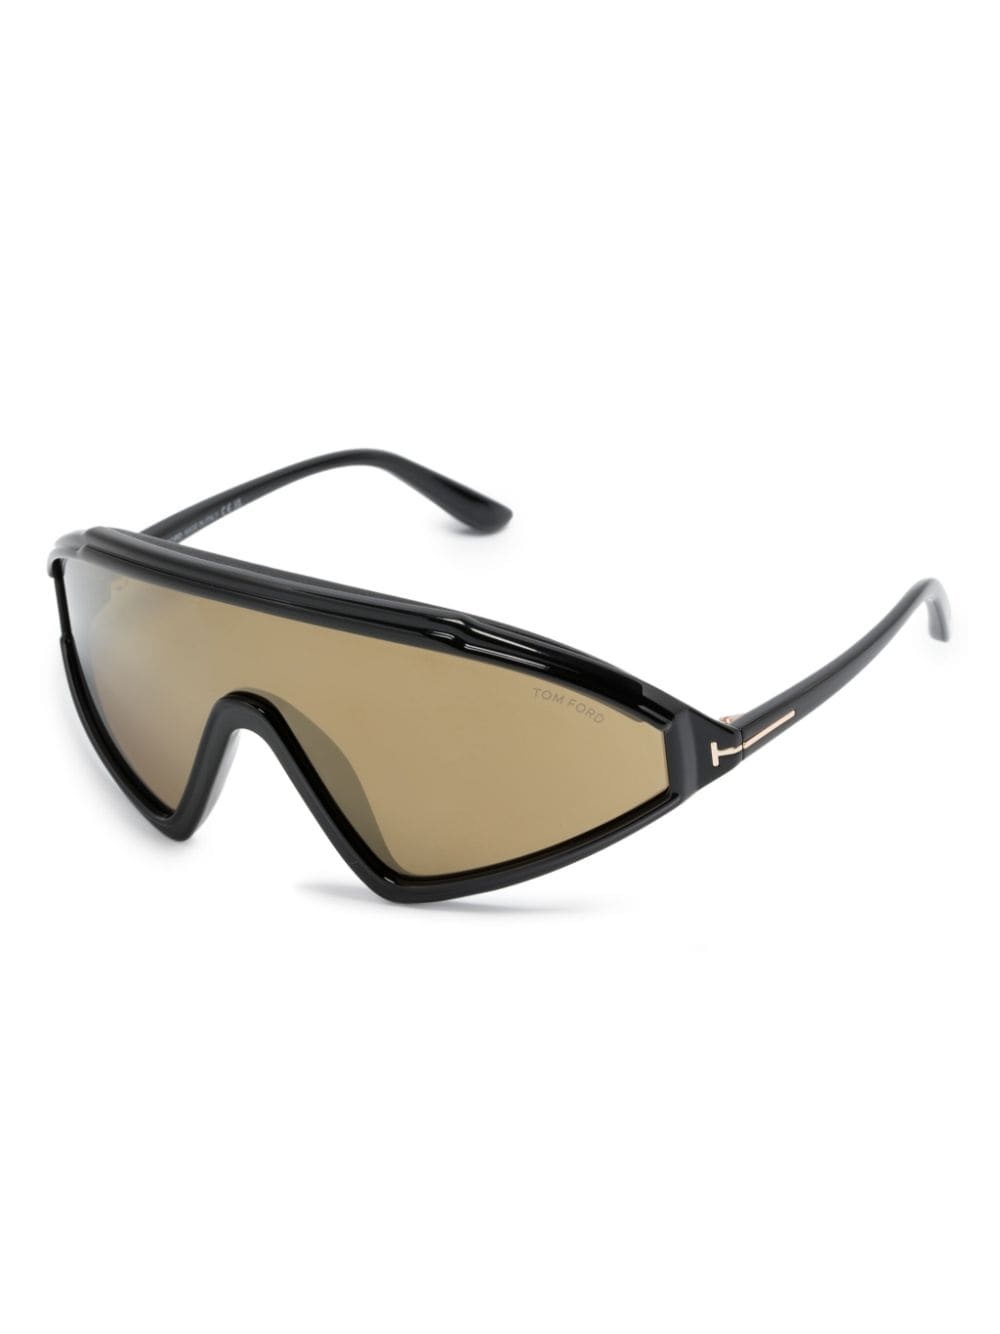 Lorna shield-frame sunglasses - 2